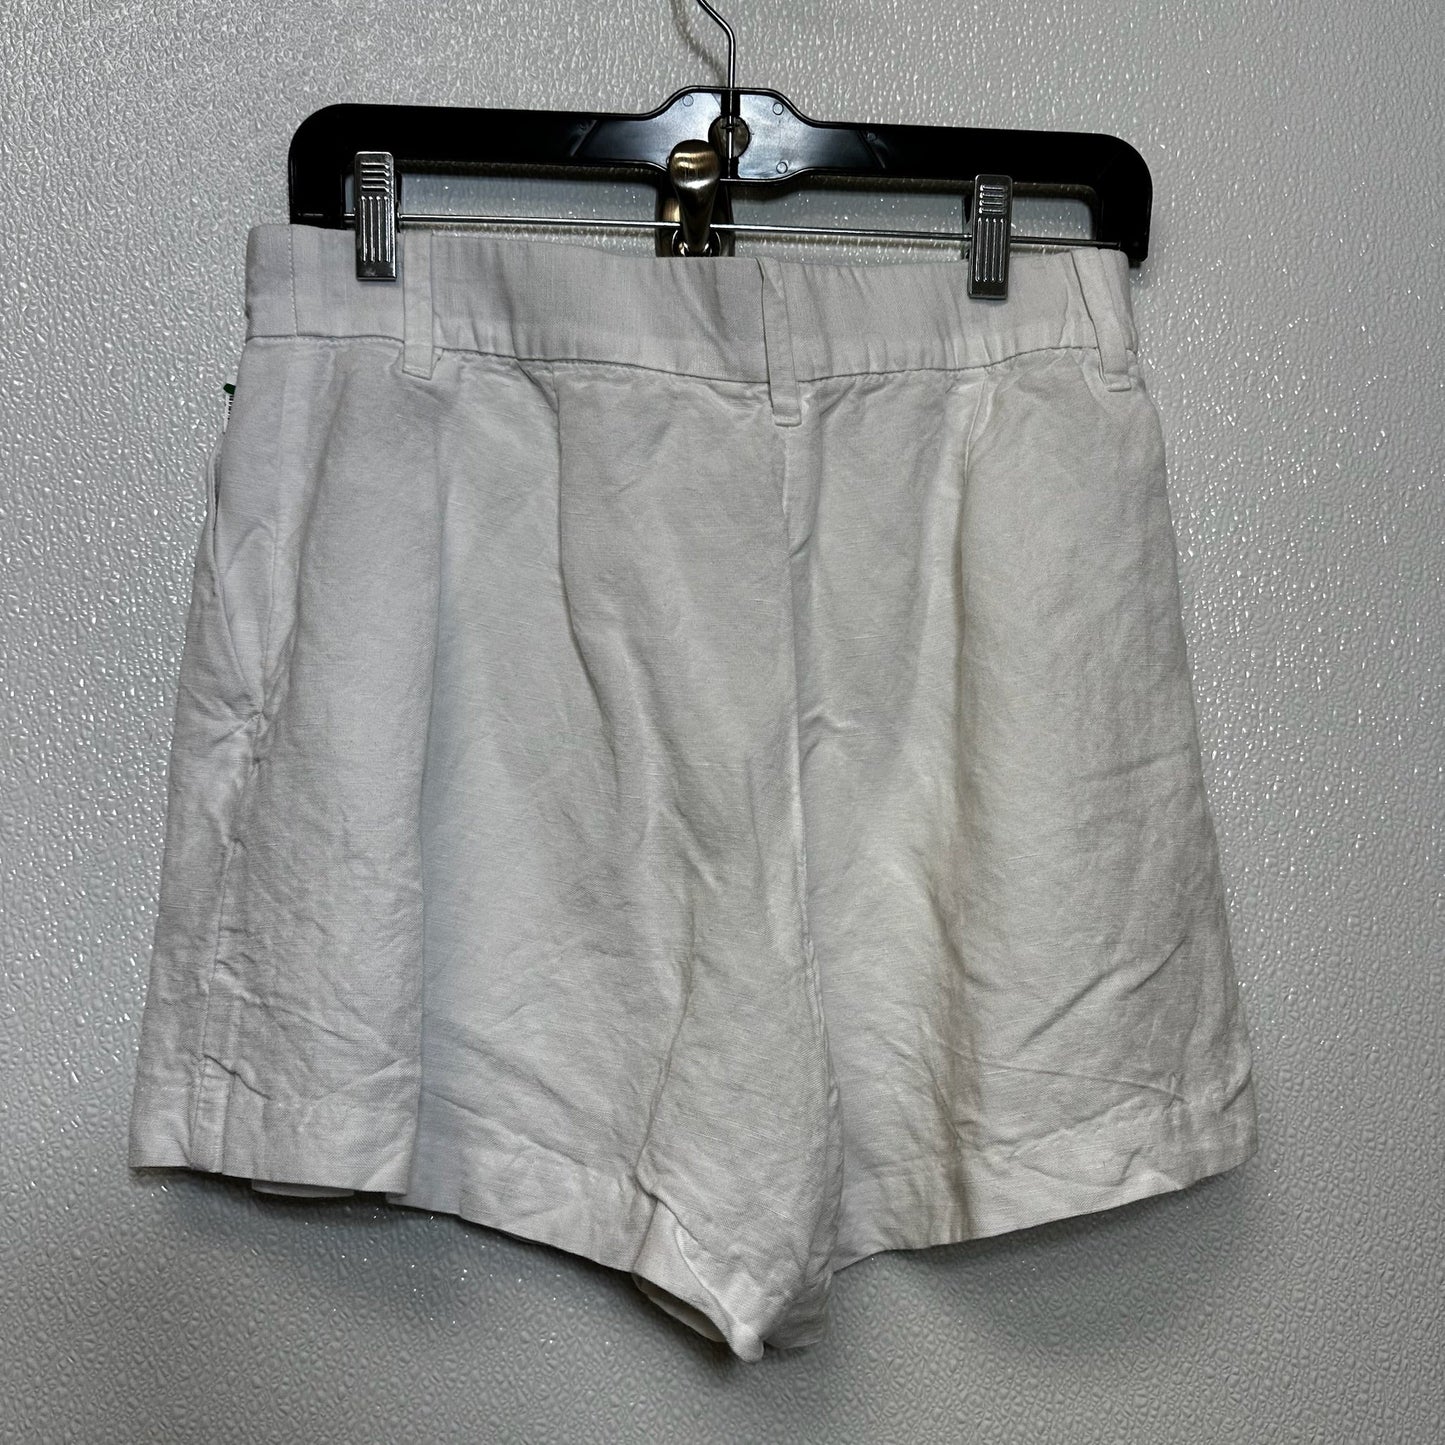 White Shorts H&m, Size 8